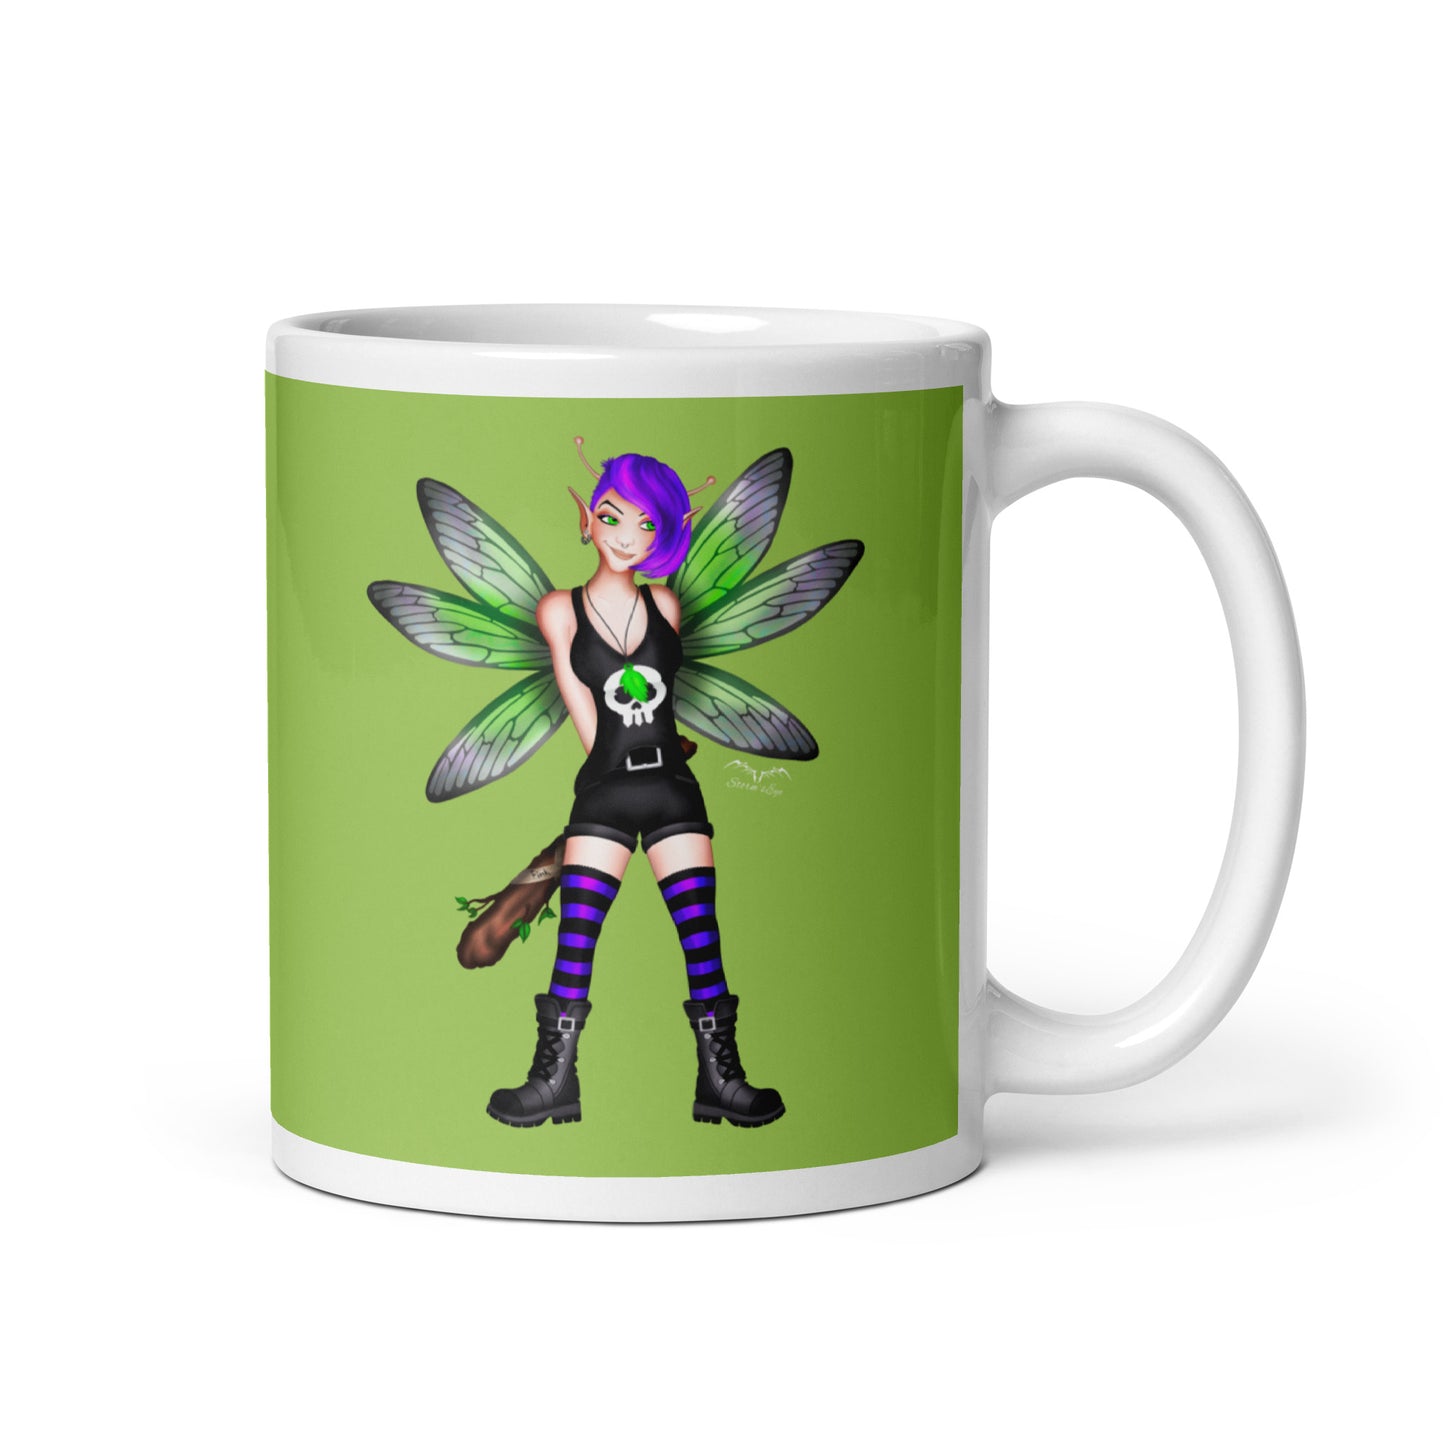 rocker fairy fink coffee mug green by stormseye designstormseye design rocker fairy fink coffee mug green